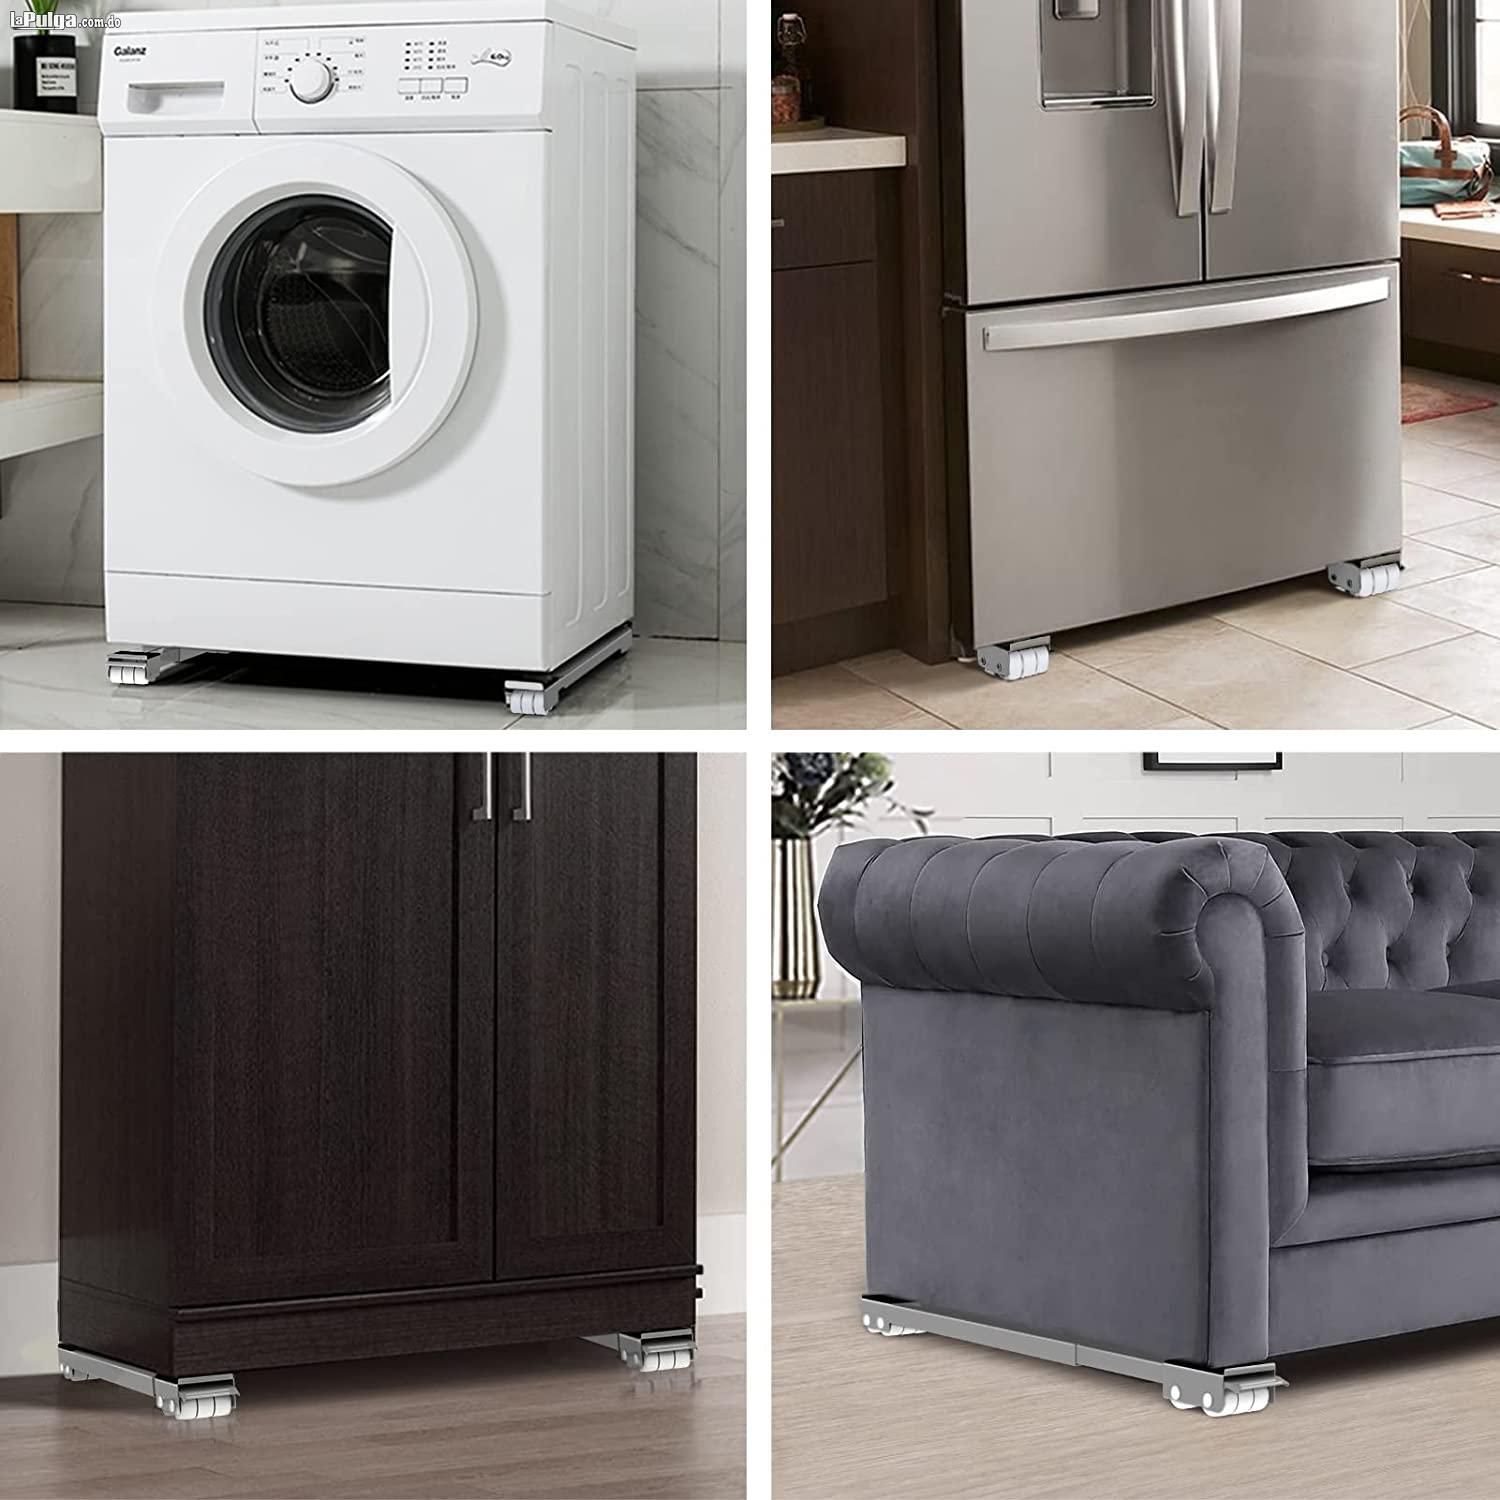 Base extensibles para electrodomésticos muebles lavadora nevera. Foto 7112363-5.jpg